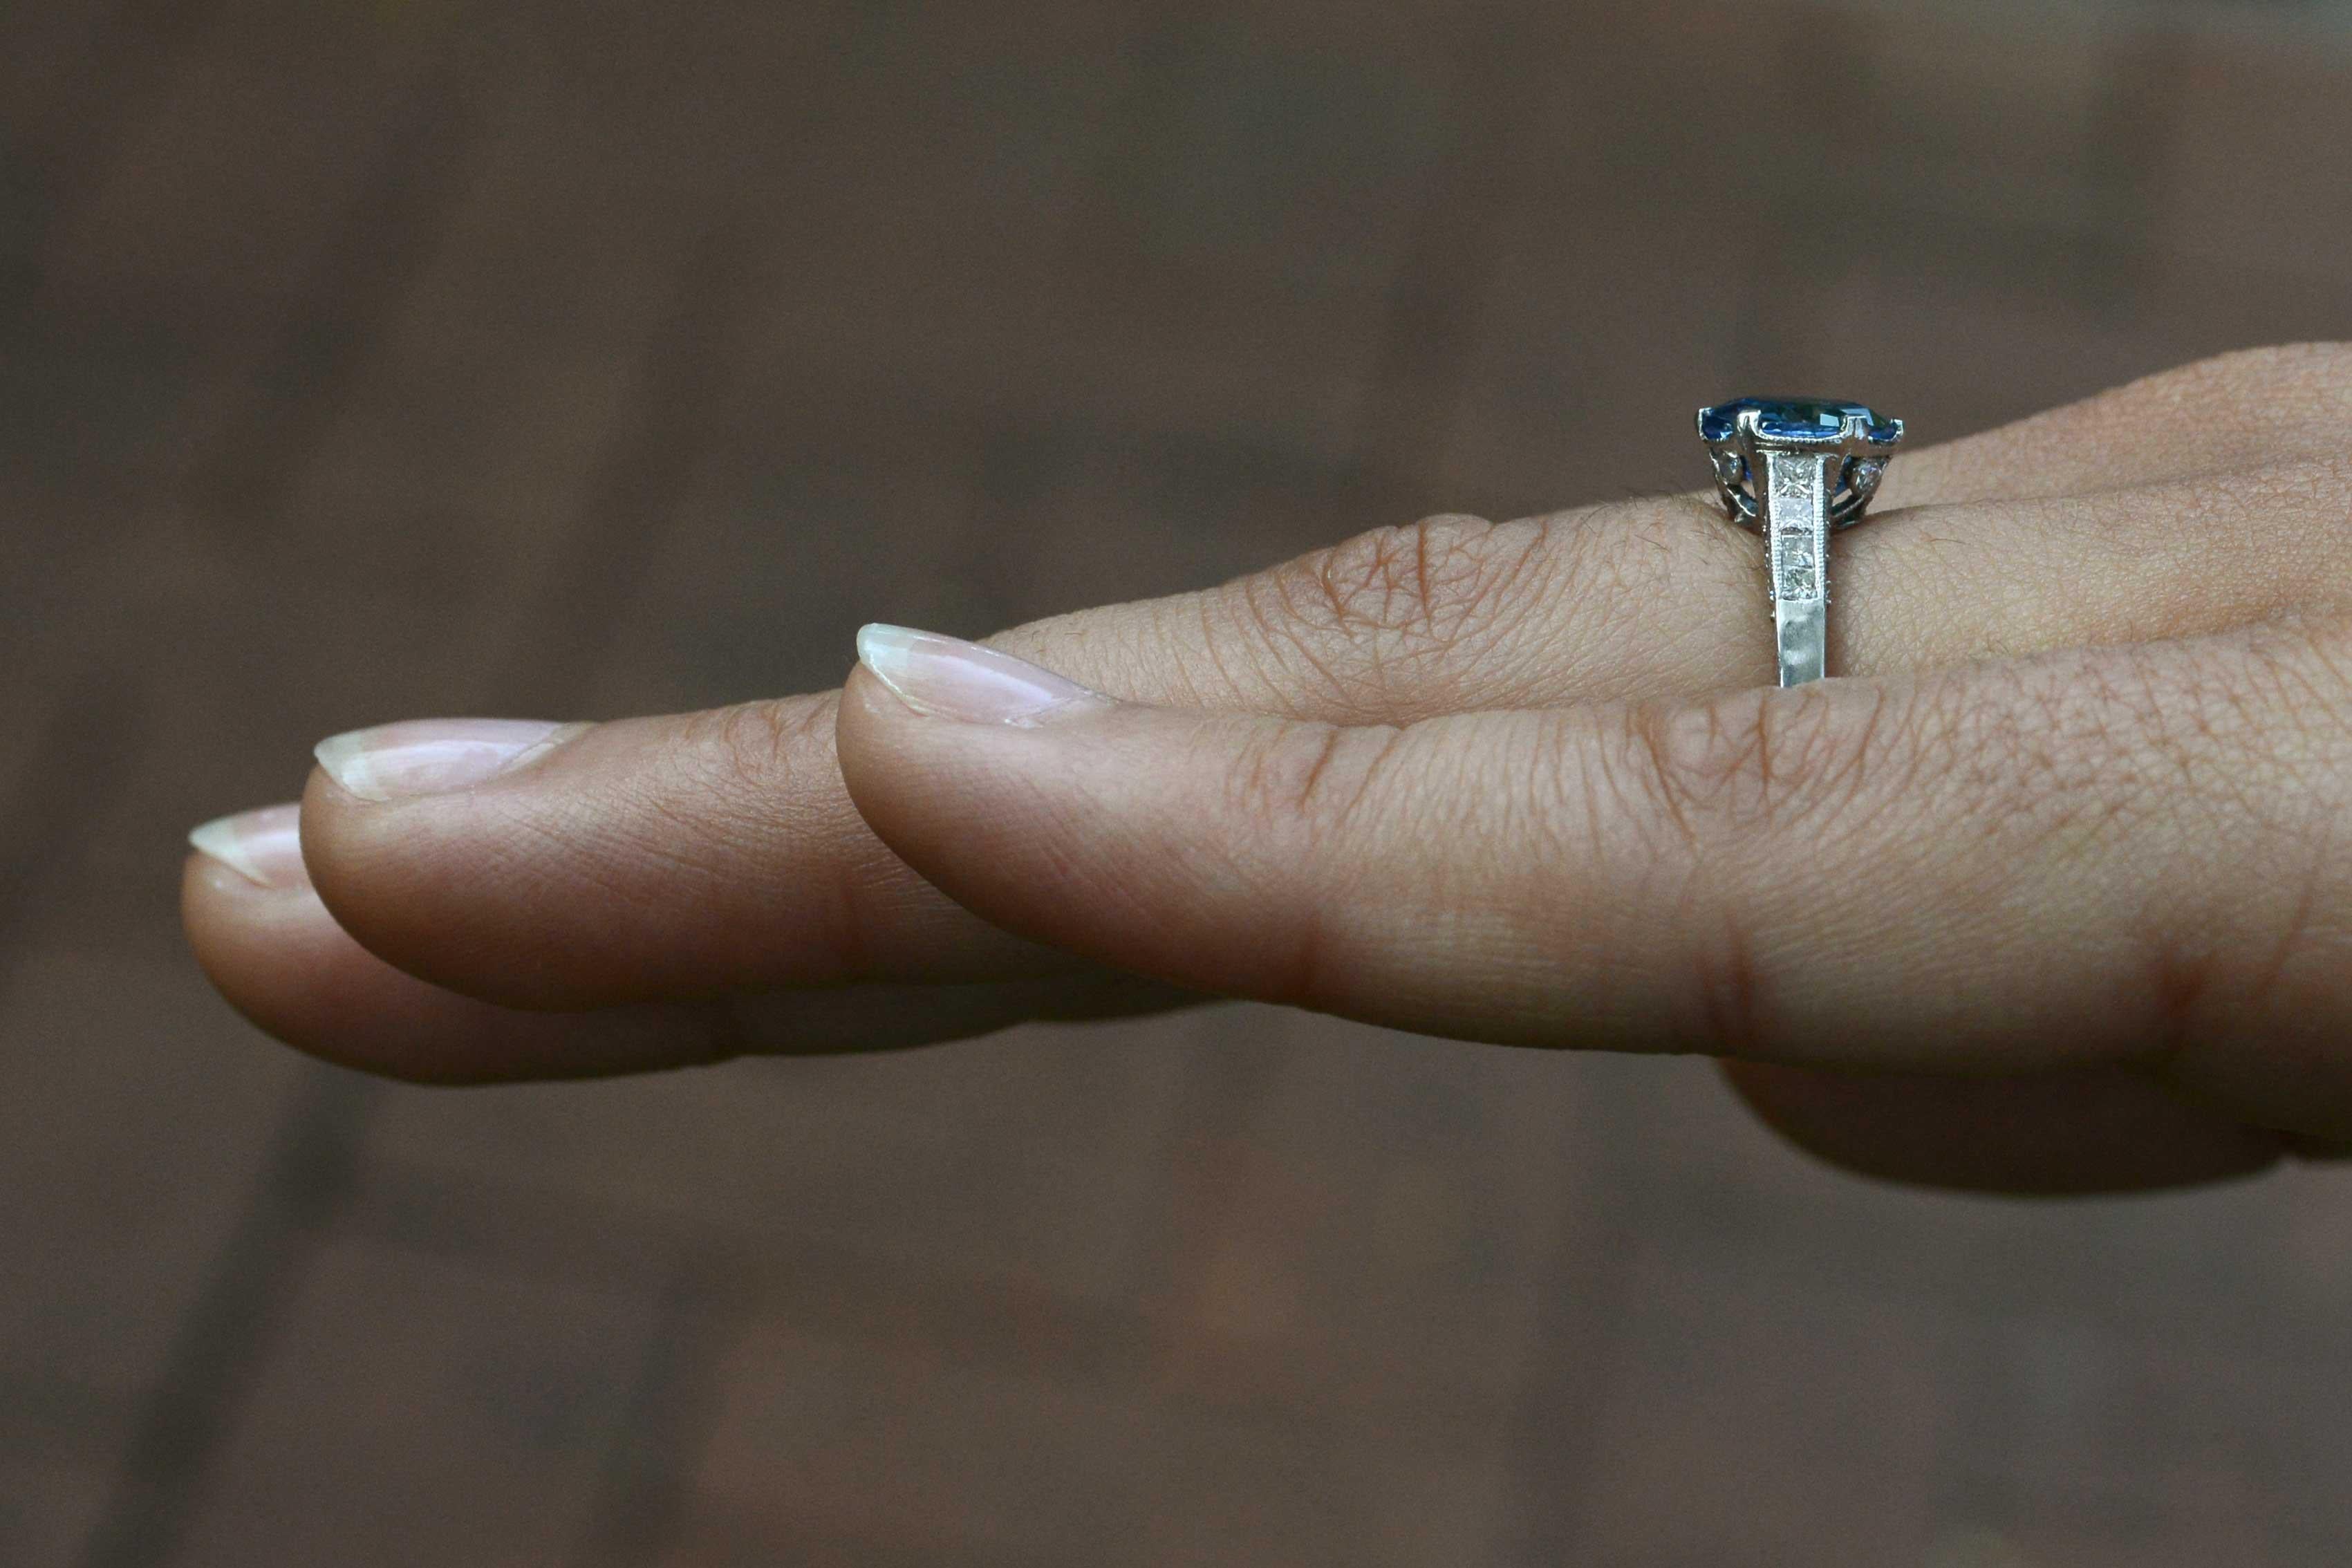 cornflower blue sapphire engagement ring